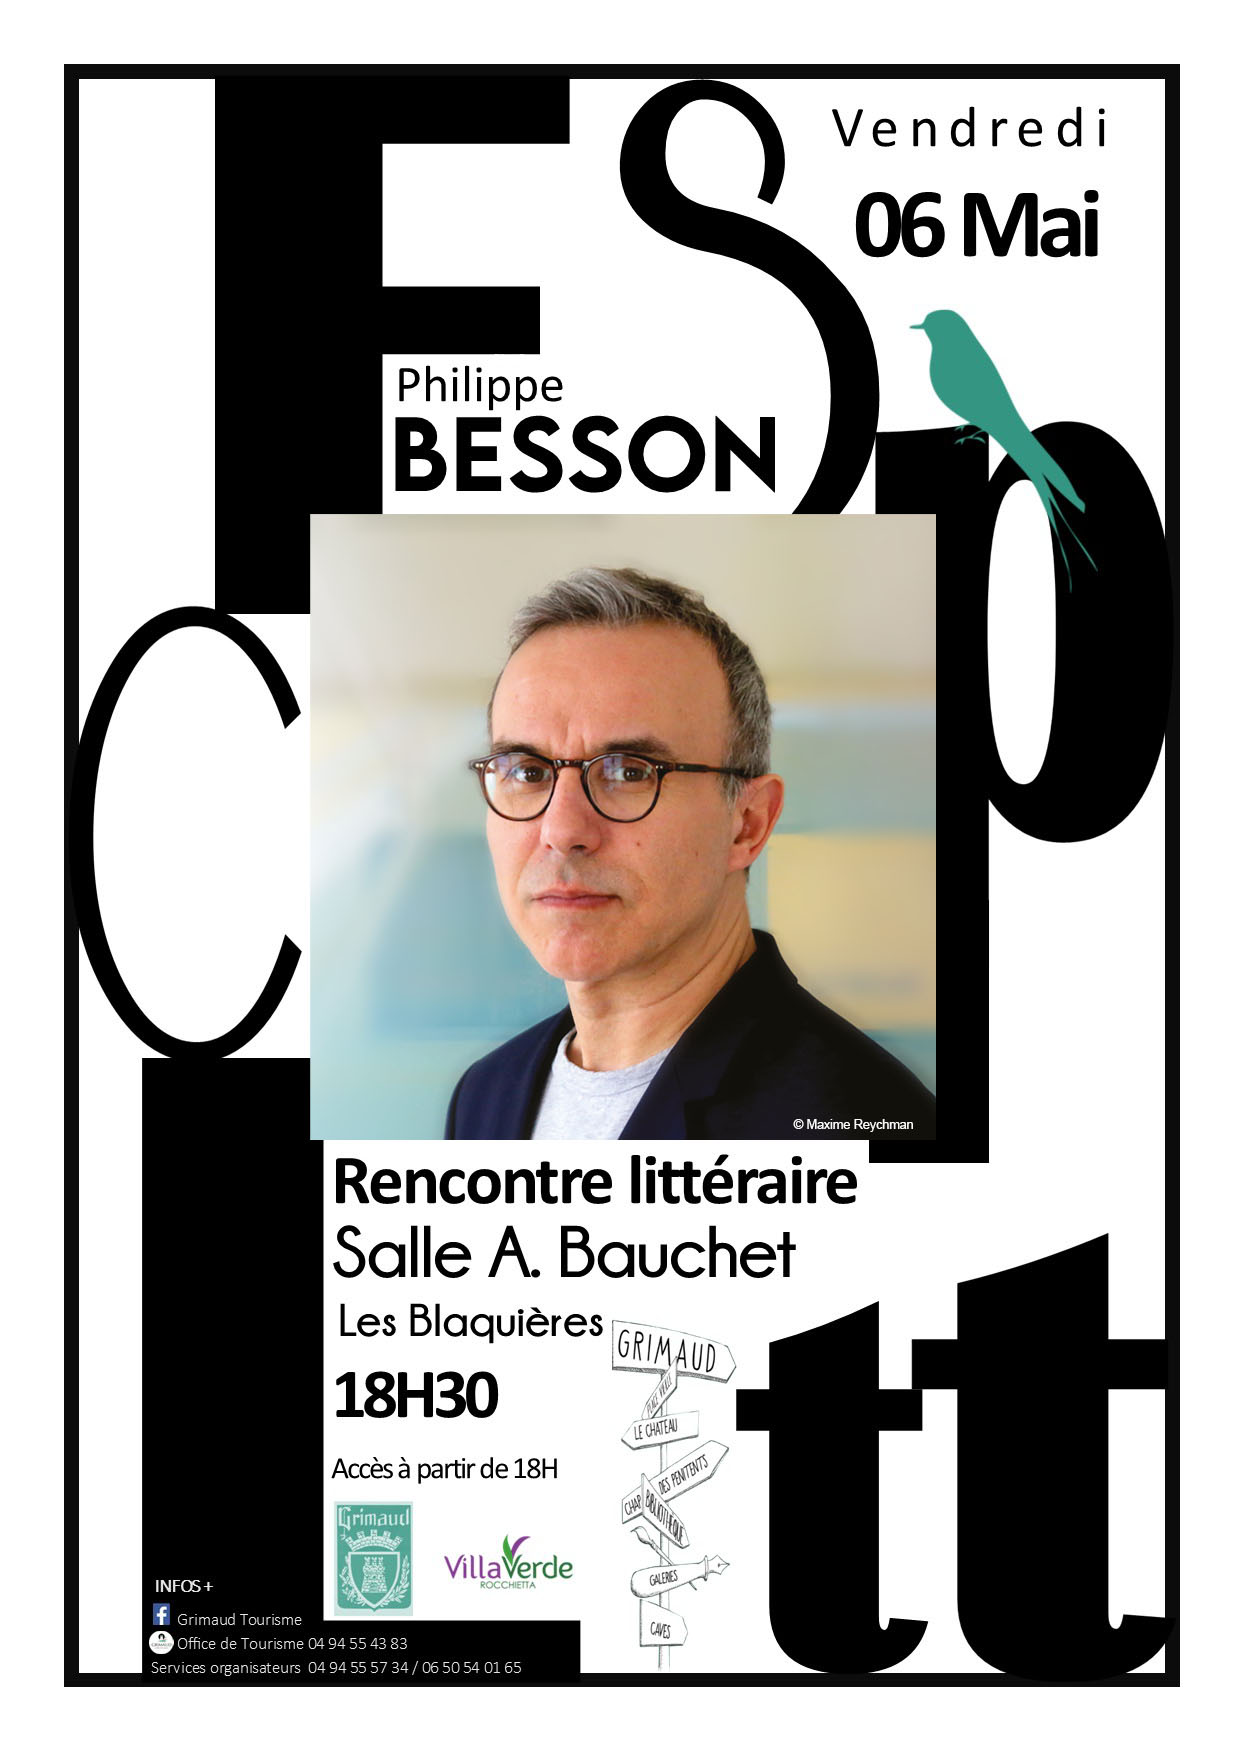 Vendredi 06 mai 2022 - Escapade littéraire avec Philippe BESSON